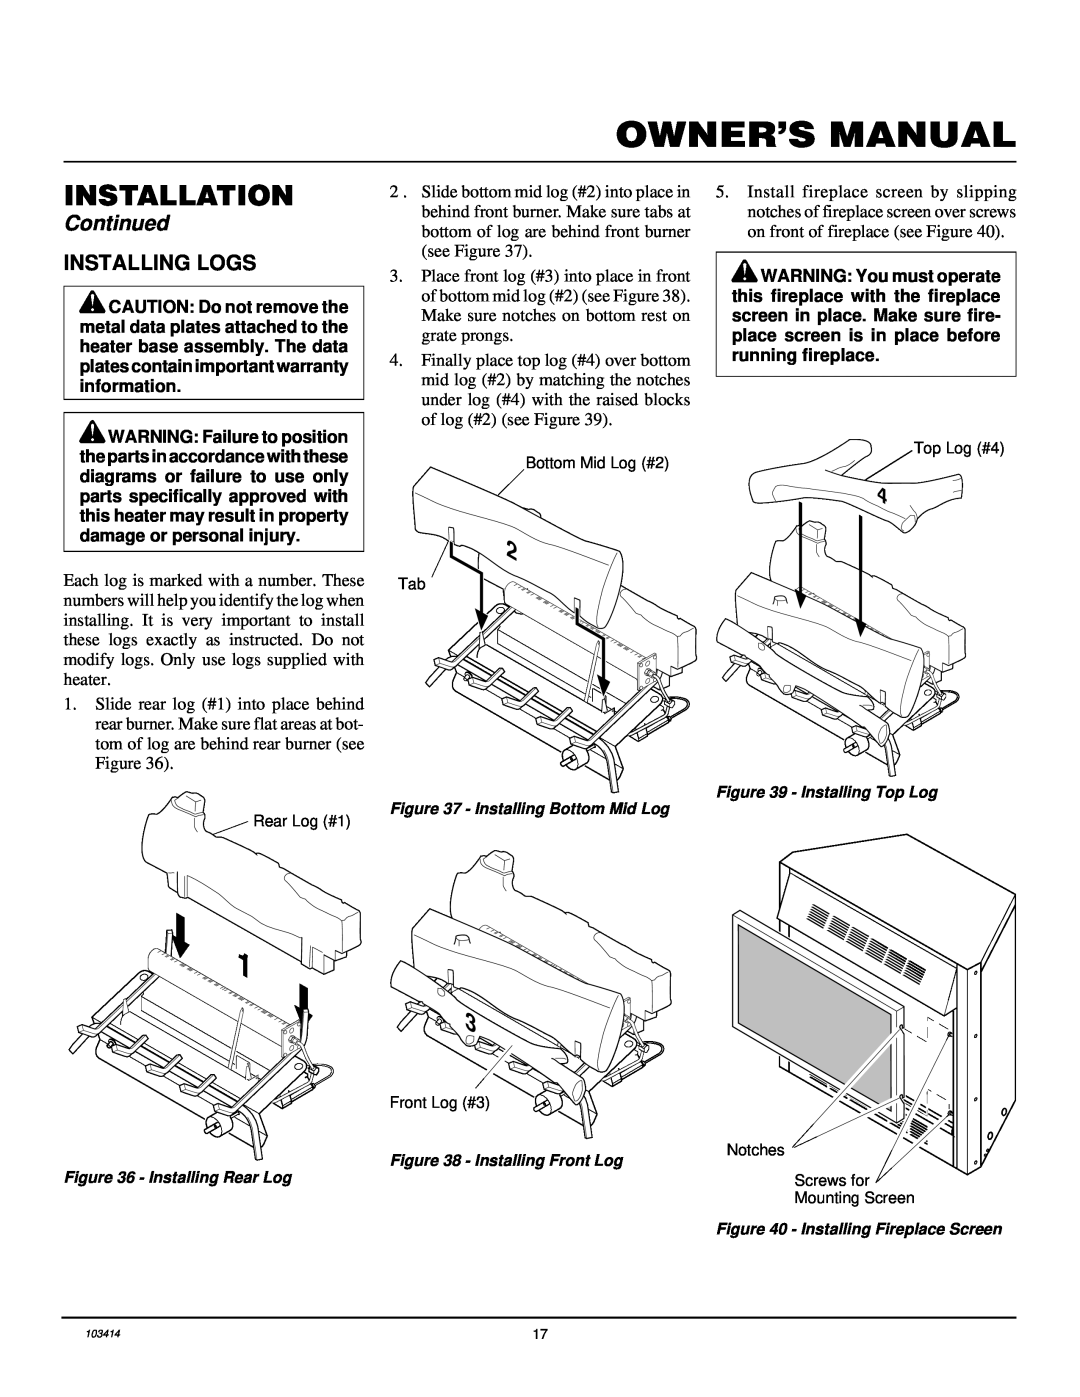 Desa CGFP28PT installation manual Installing Logs, Installation, Continued 